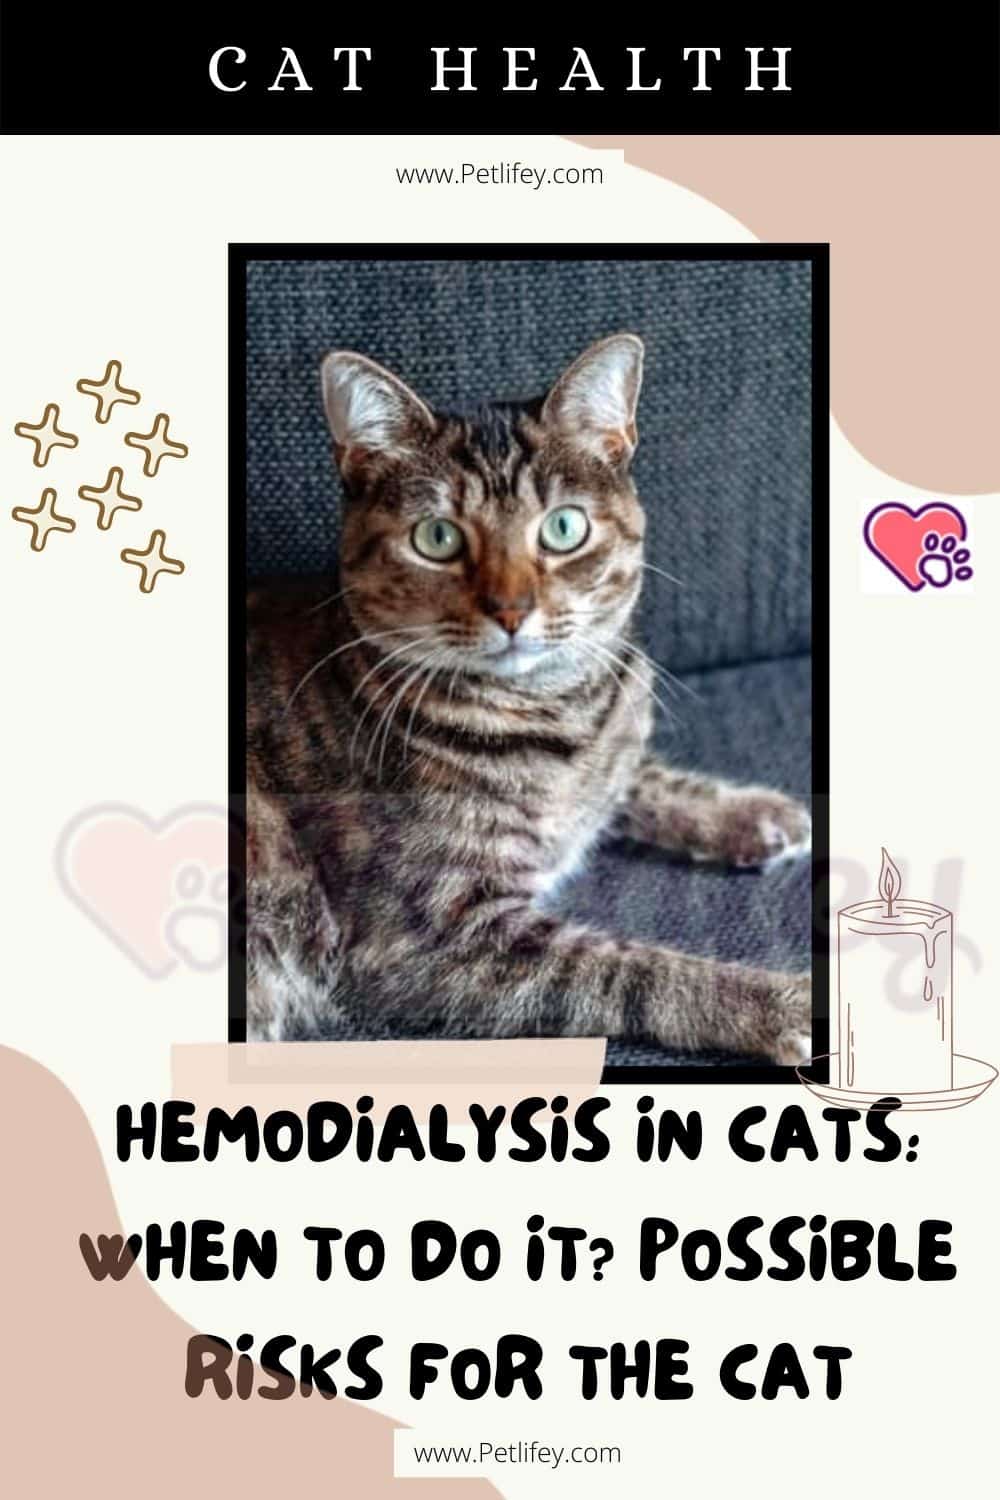 Hemodialysis in cats